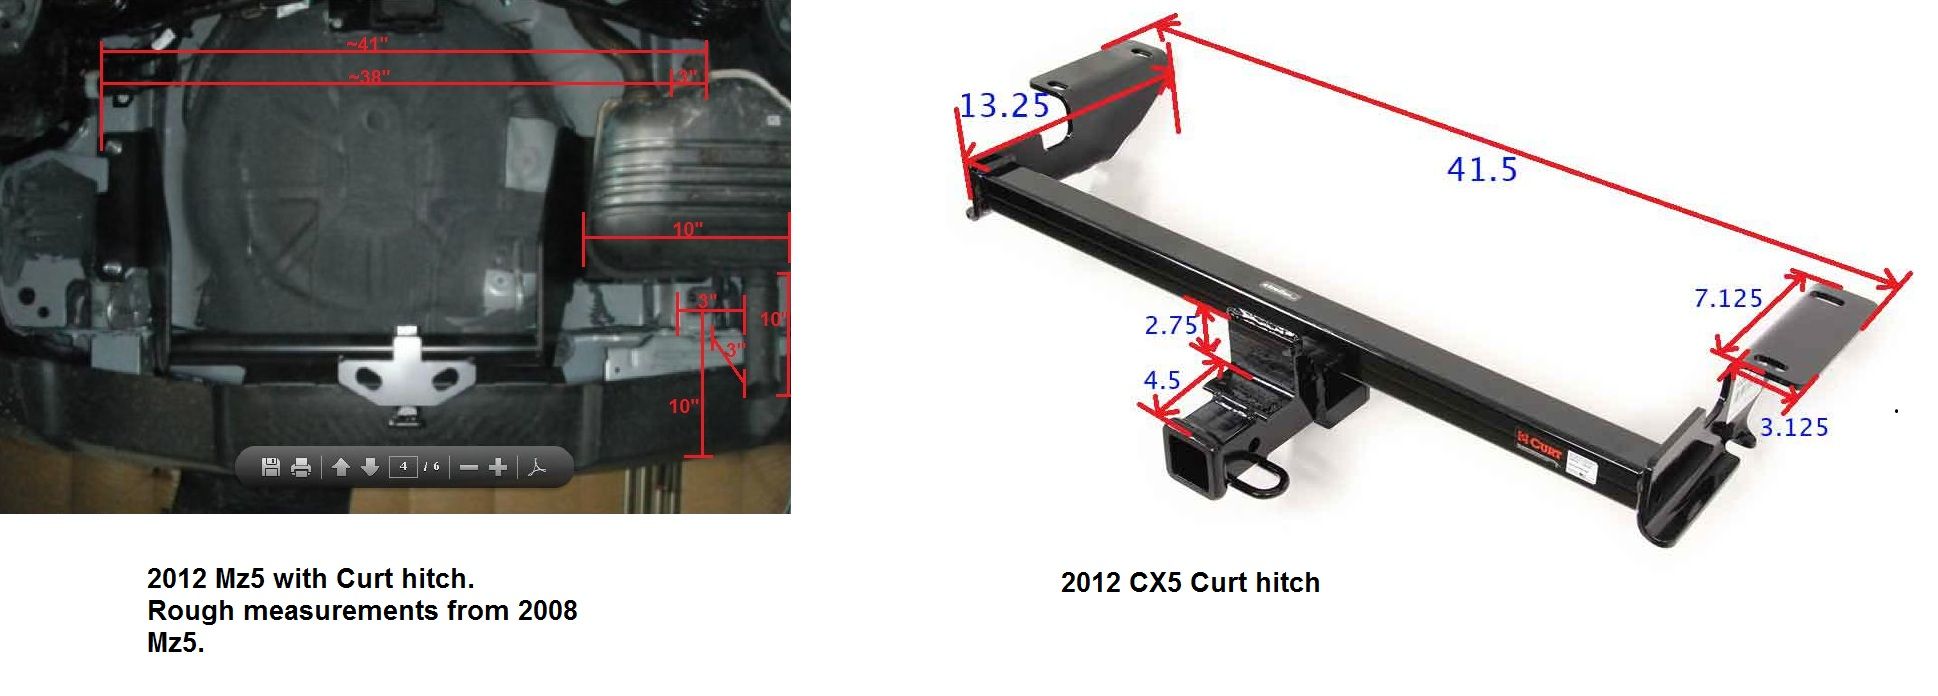 Mz5 underside vs CX5 hitch.jpg